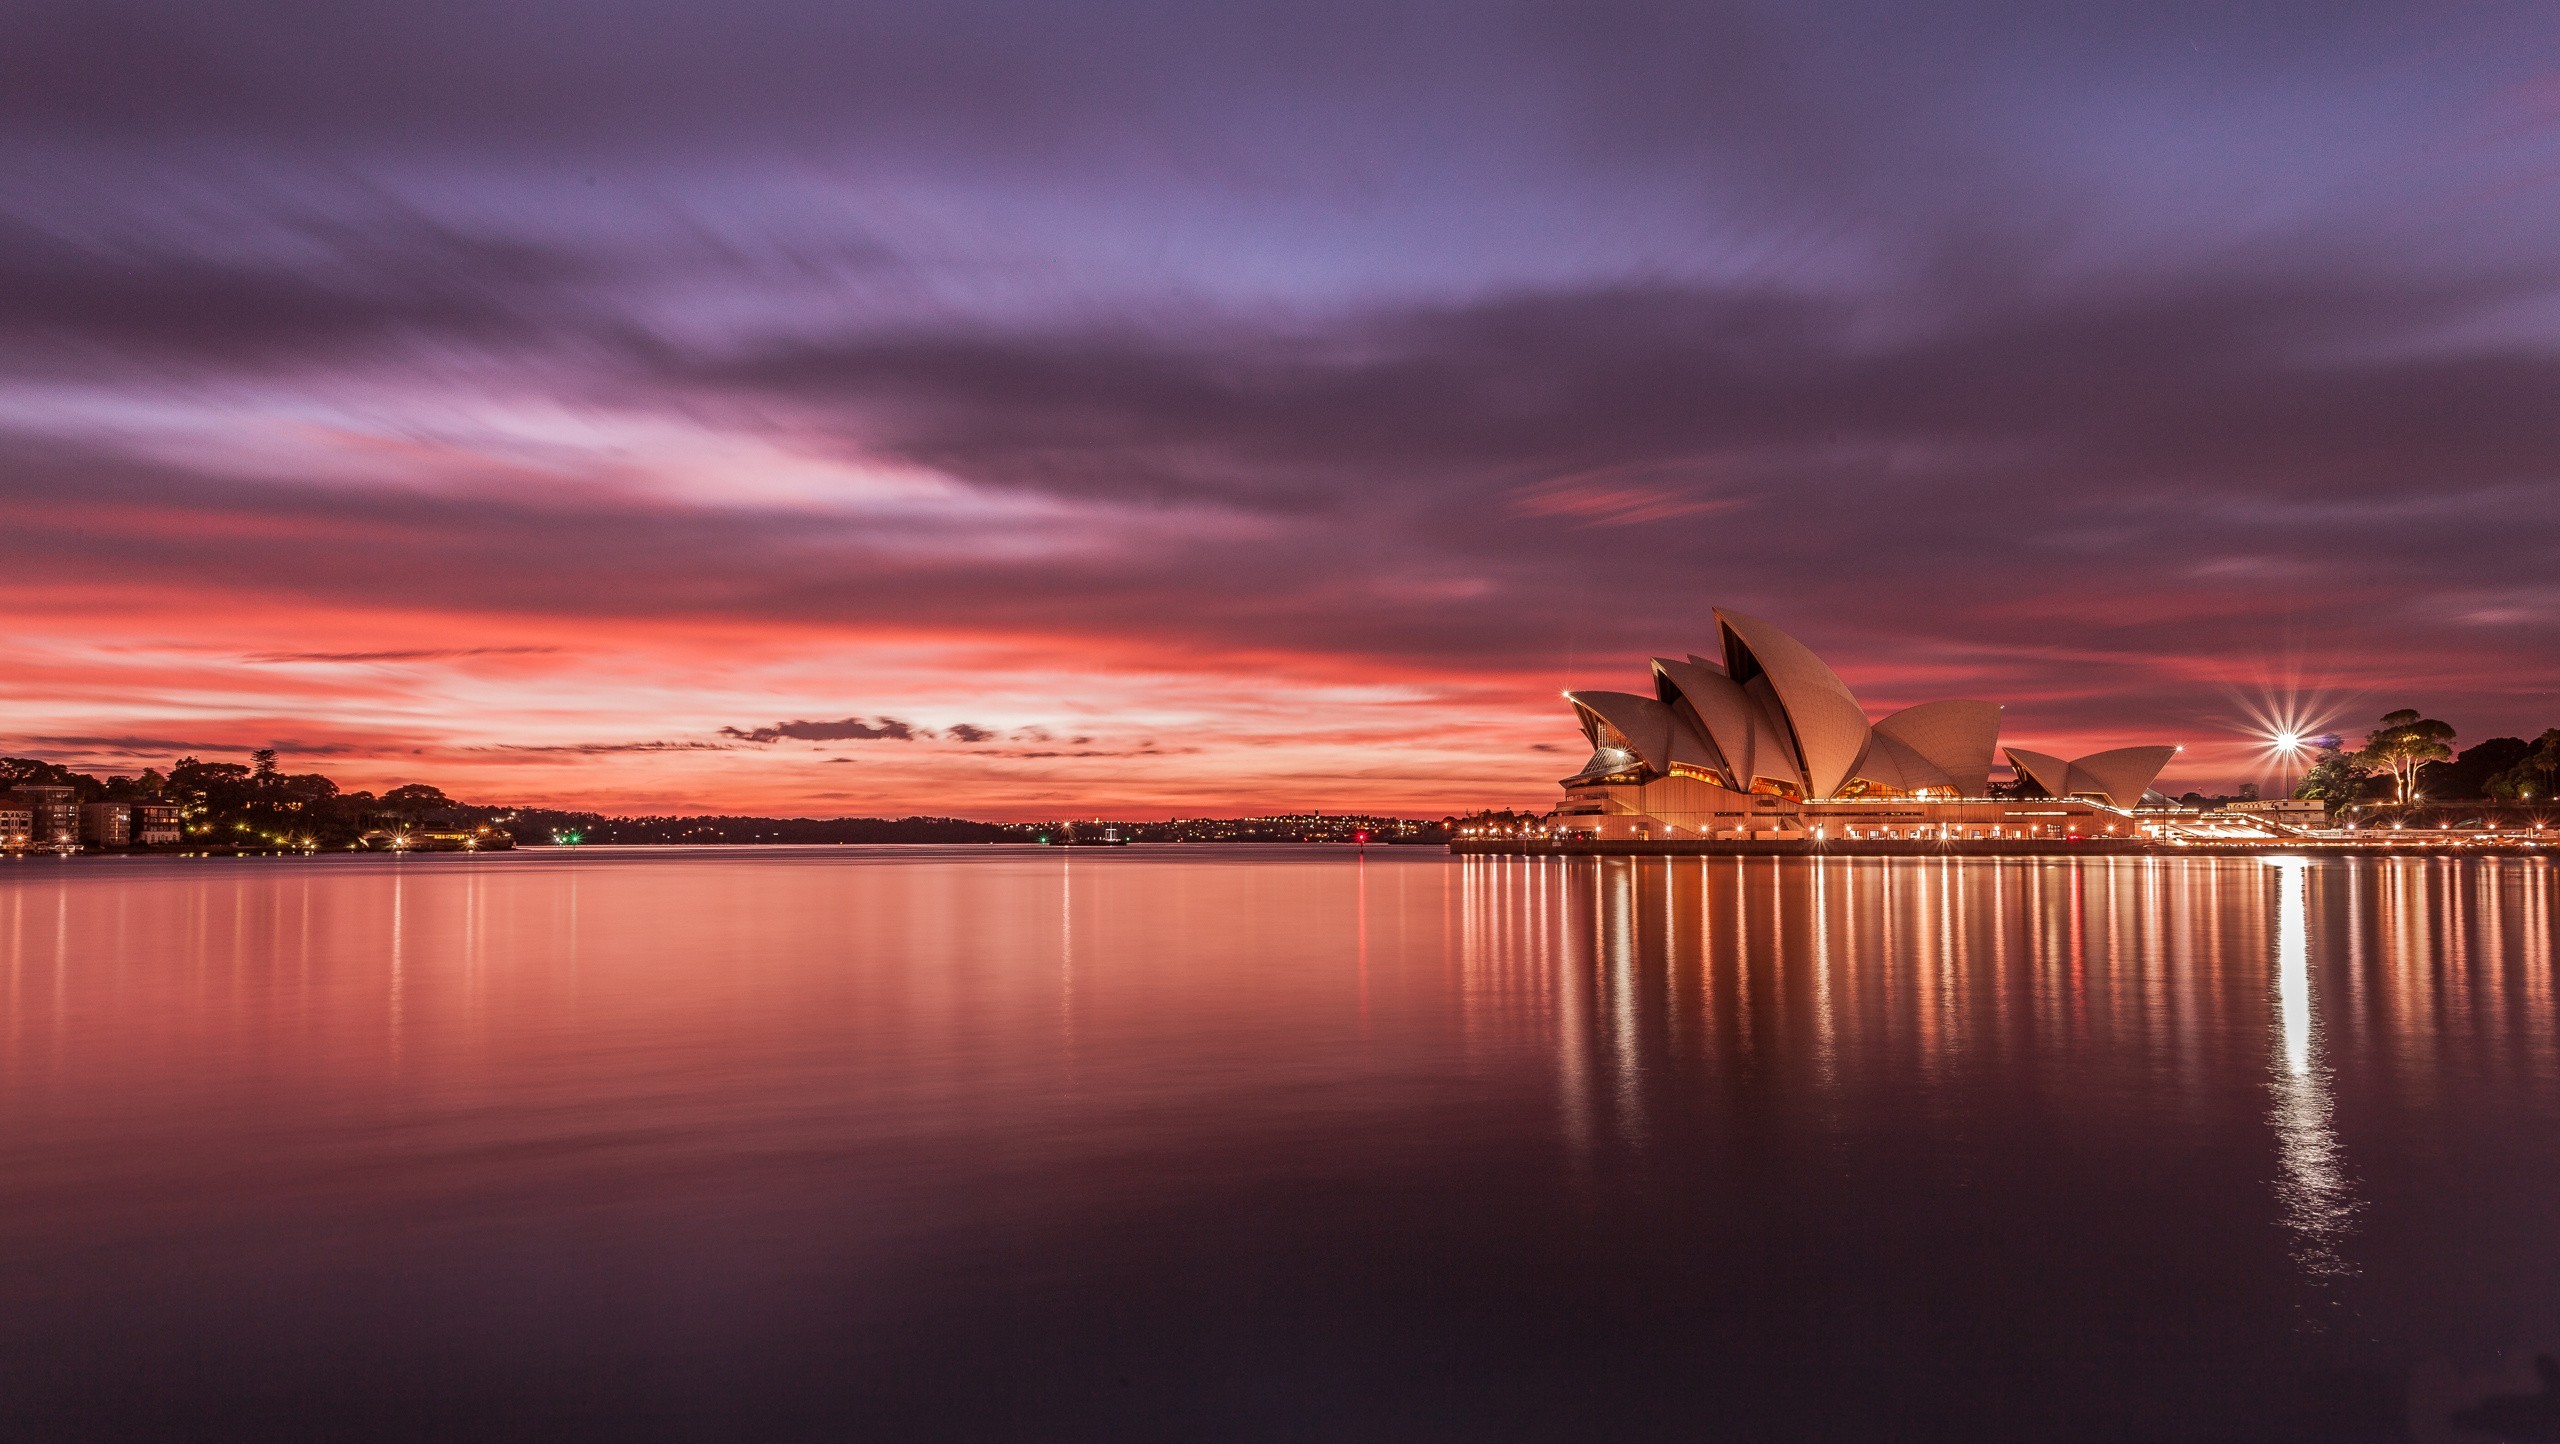 General 2560x1444 cityscape Sydney Sydney Opera House sunset purple sky sky calm waters Australia